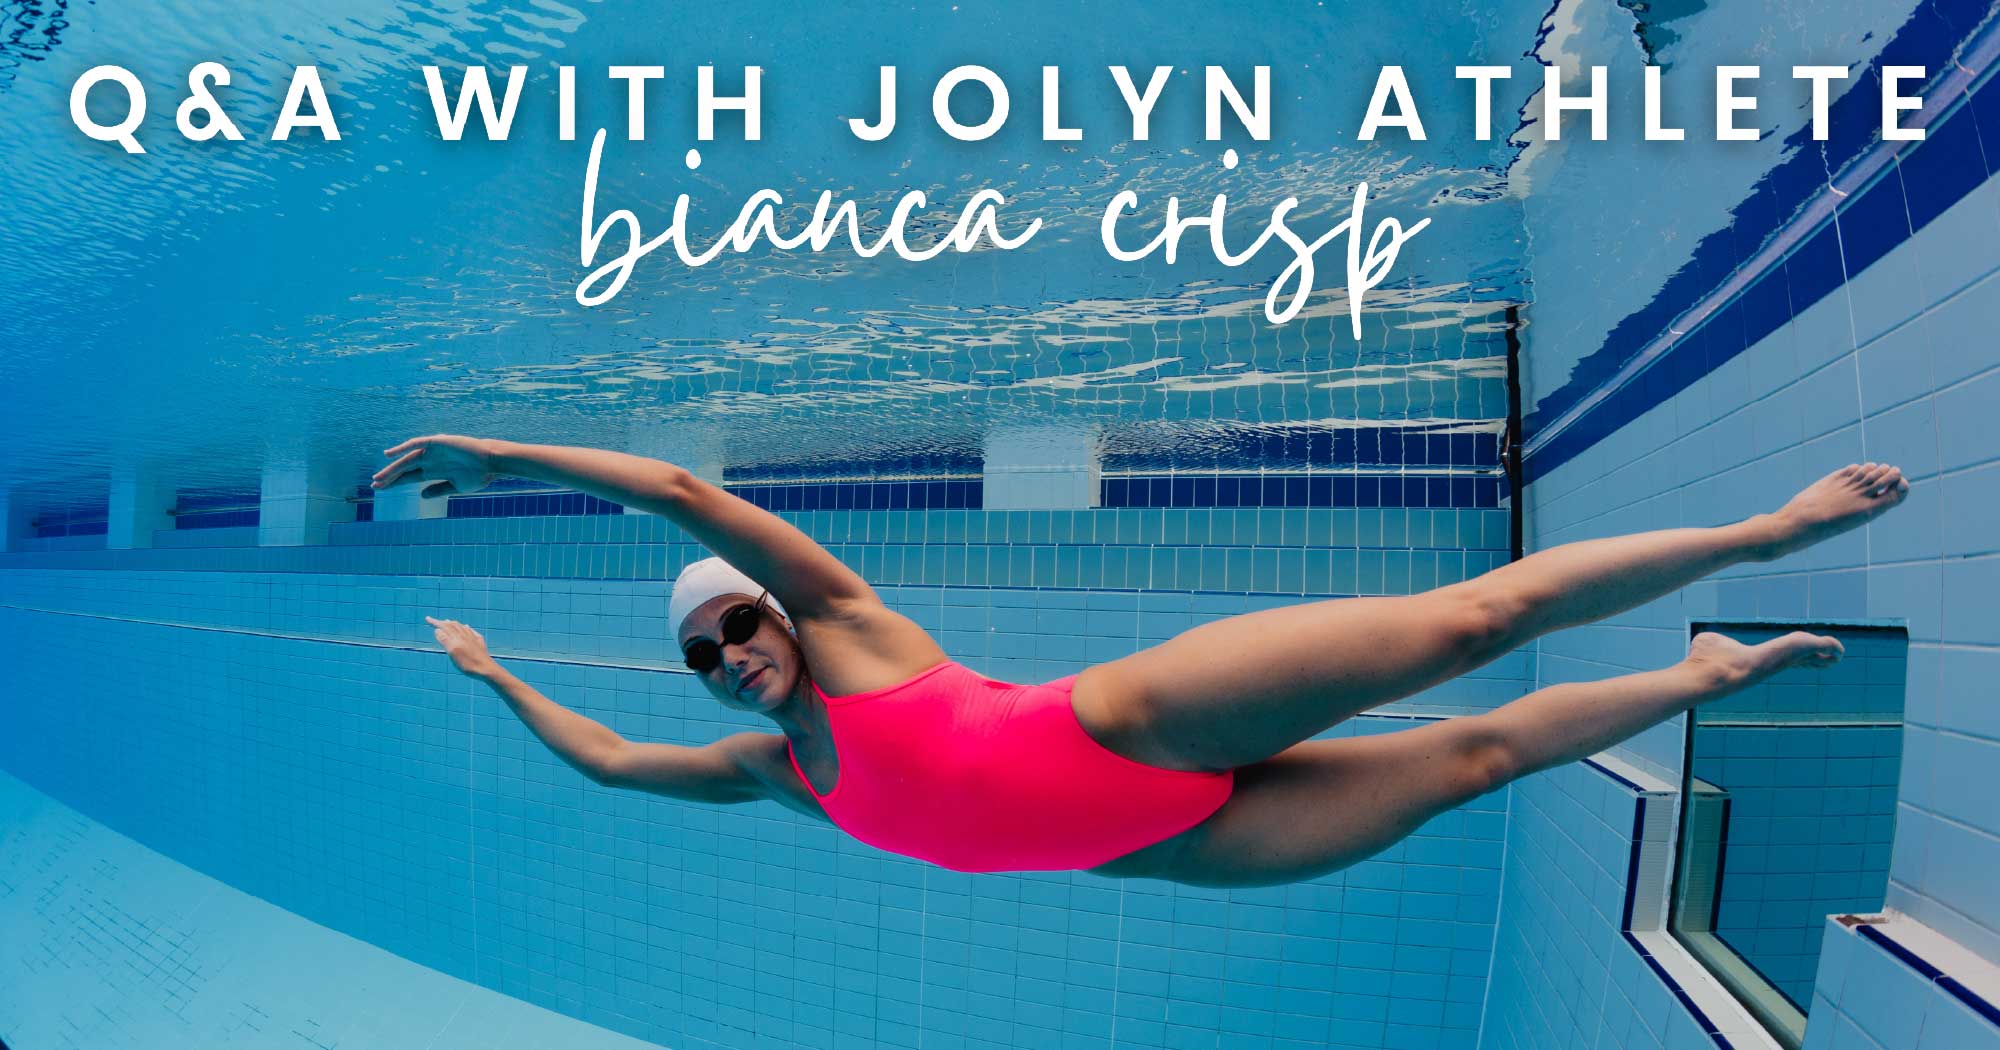 JOLYN Australia womens athletic swimwear blog post Bianca Crisp athlete Q&A